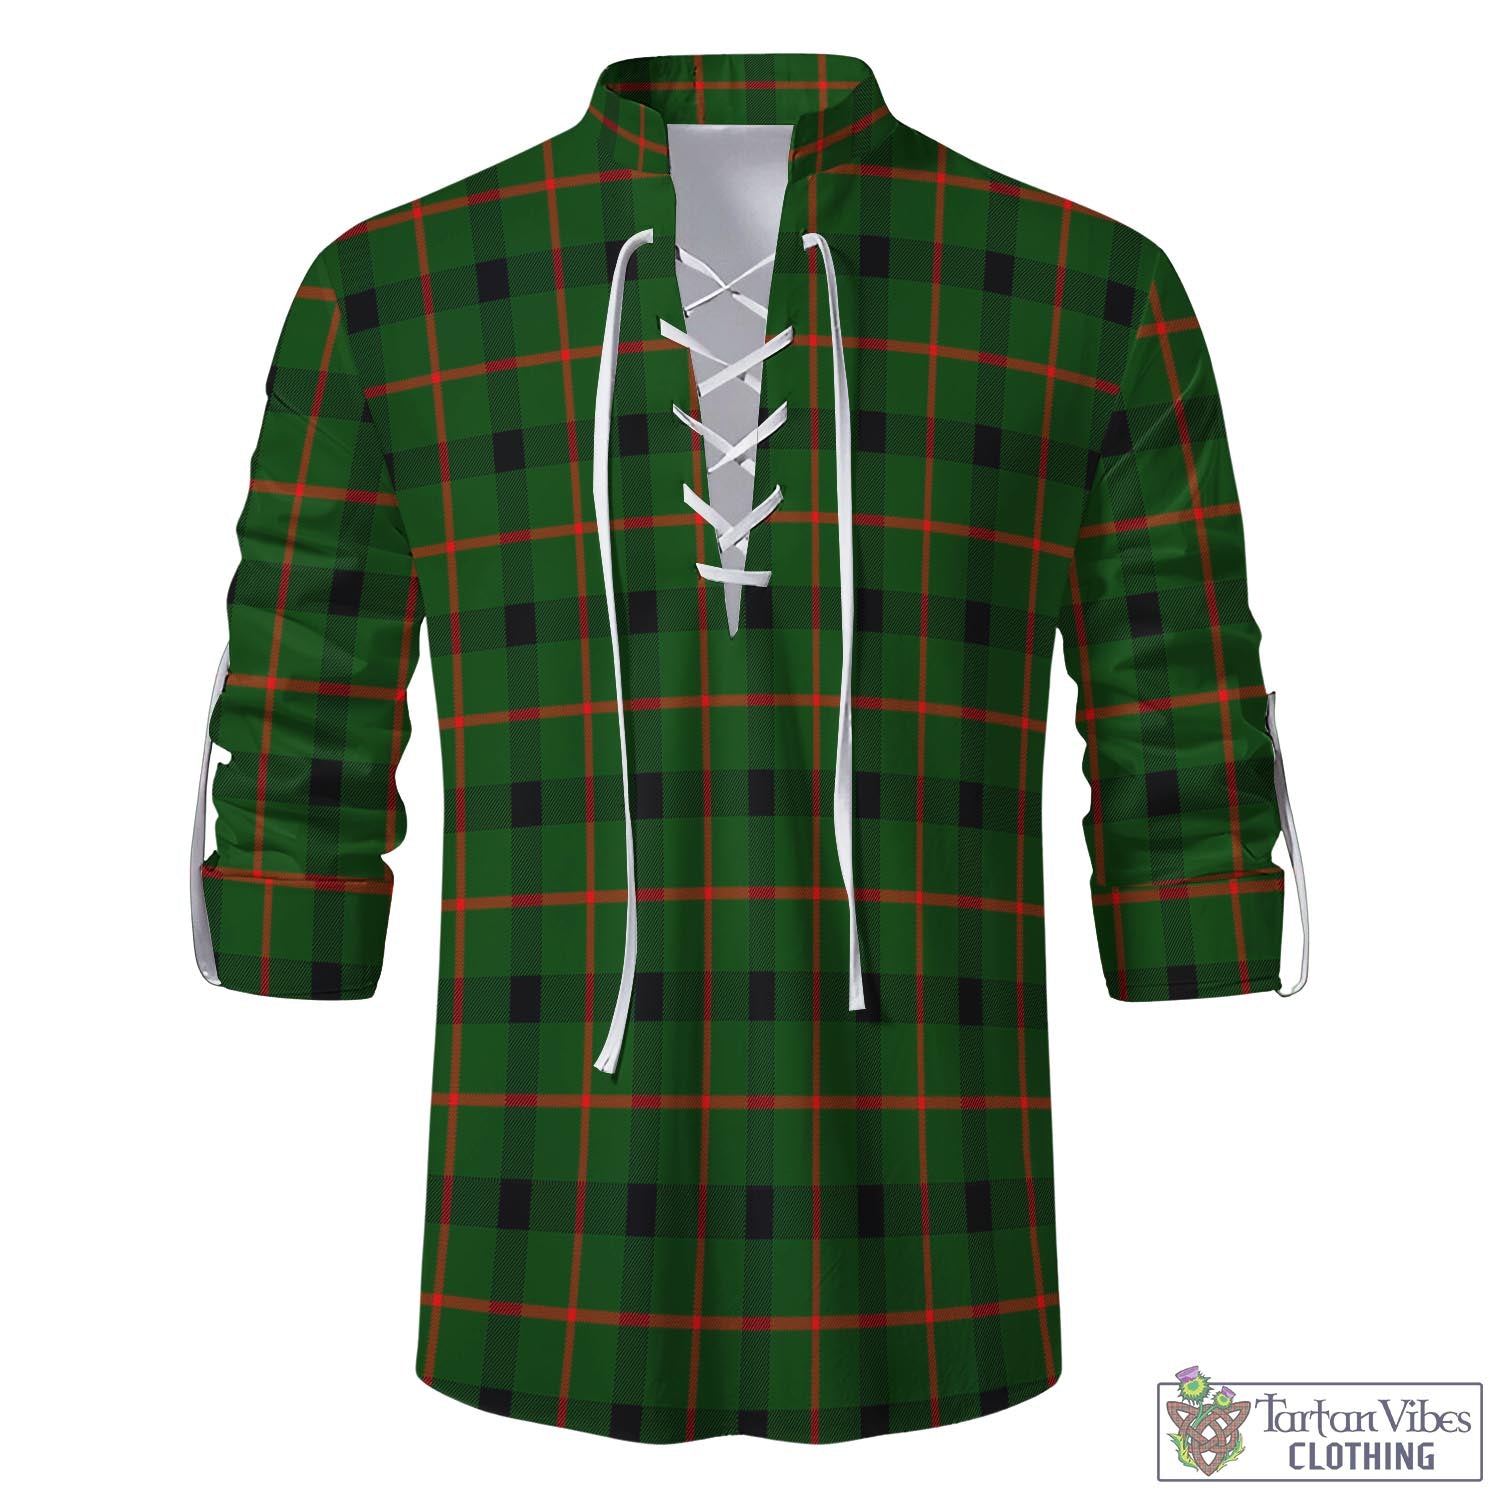 Tartan Vibes Clothing Kincaid Modern Tartan Men's Scottish Traditional Jacobite Ghillie Kilt Shirt